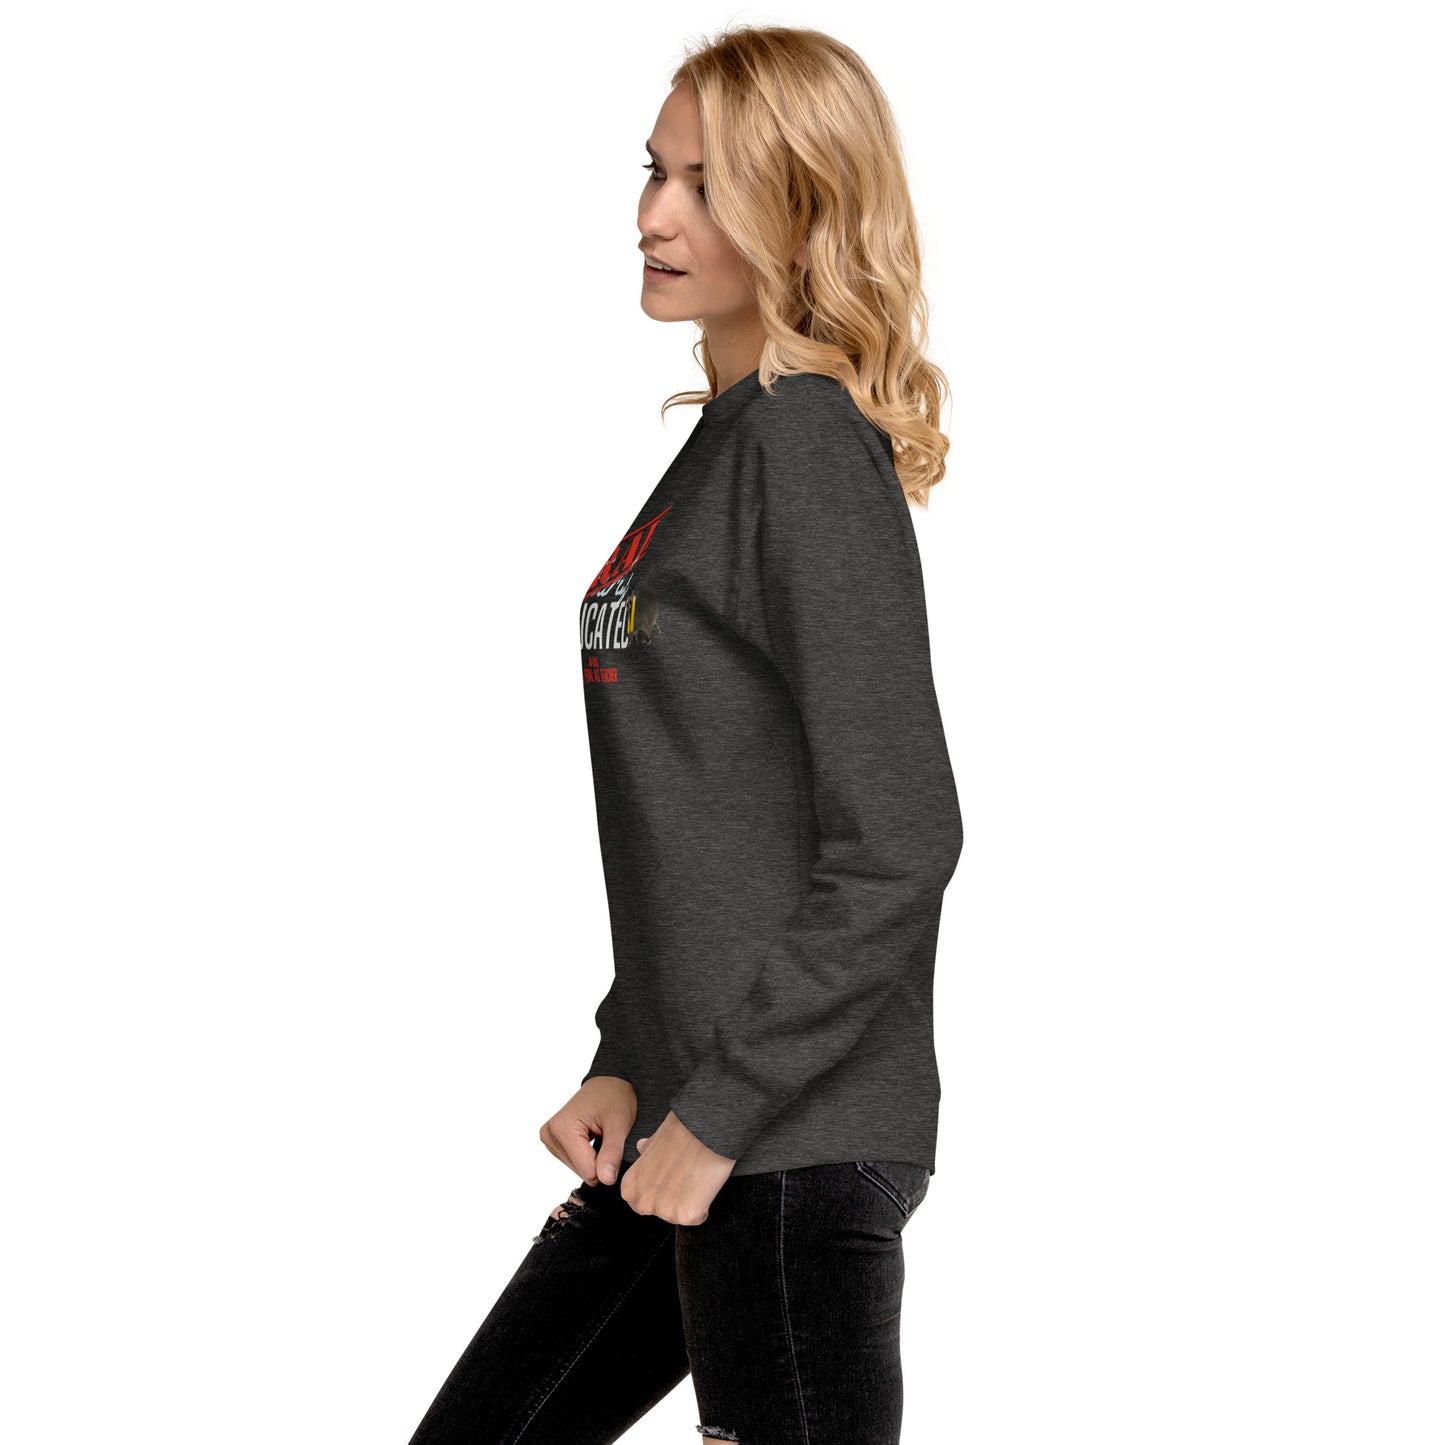 FERAL-ly Educated Unisex Premium Sweatshirt